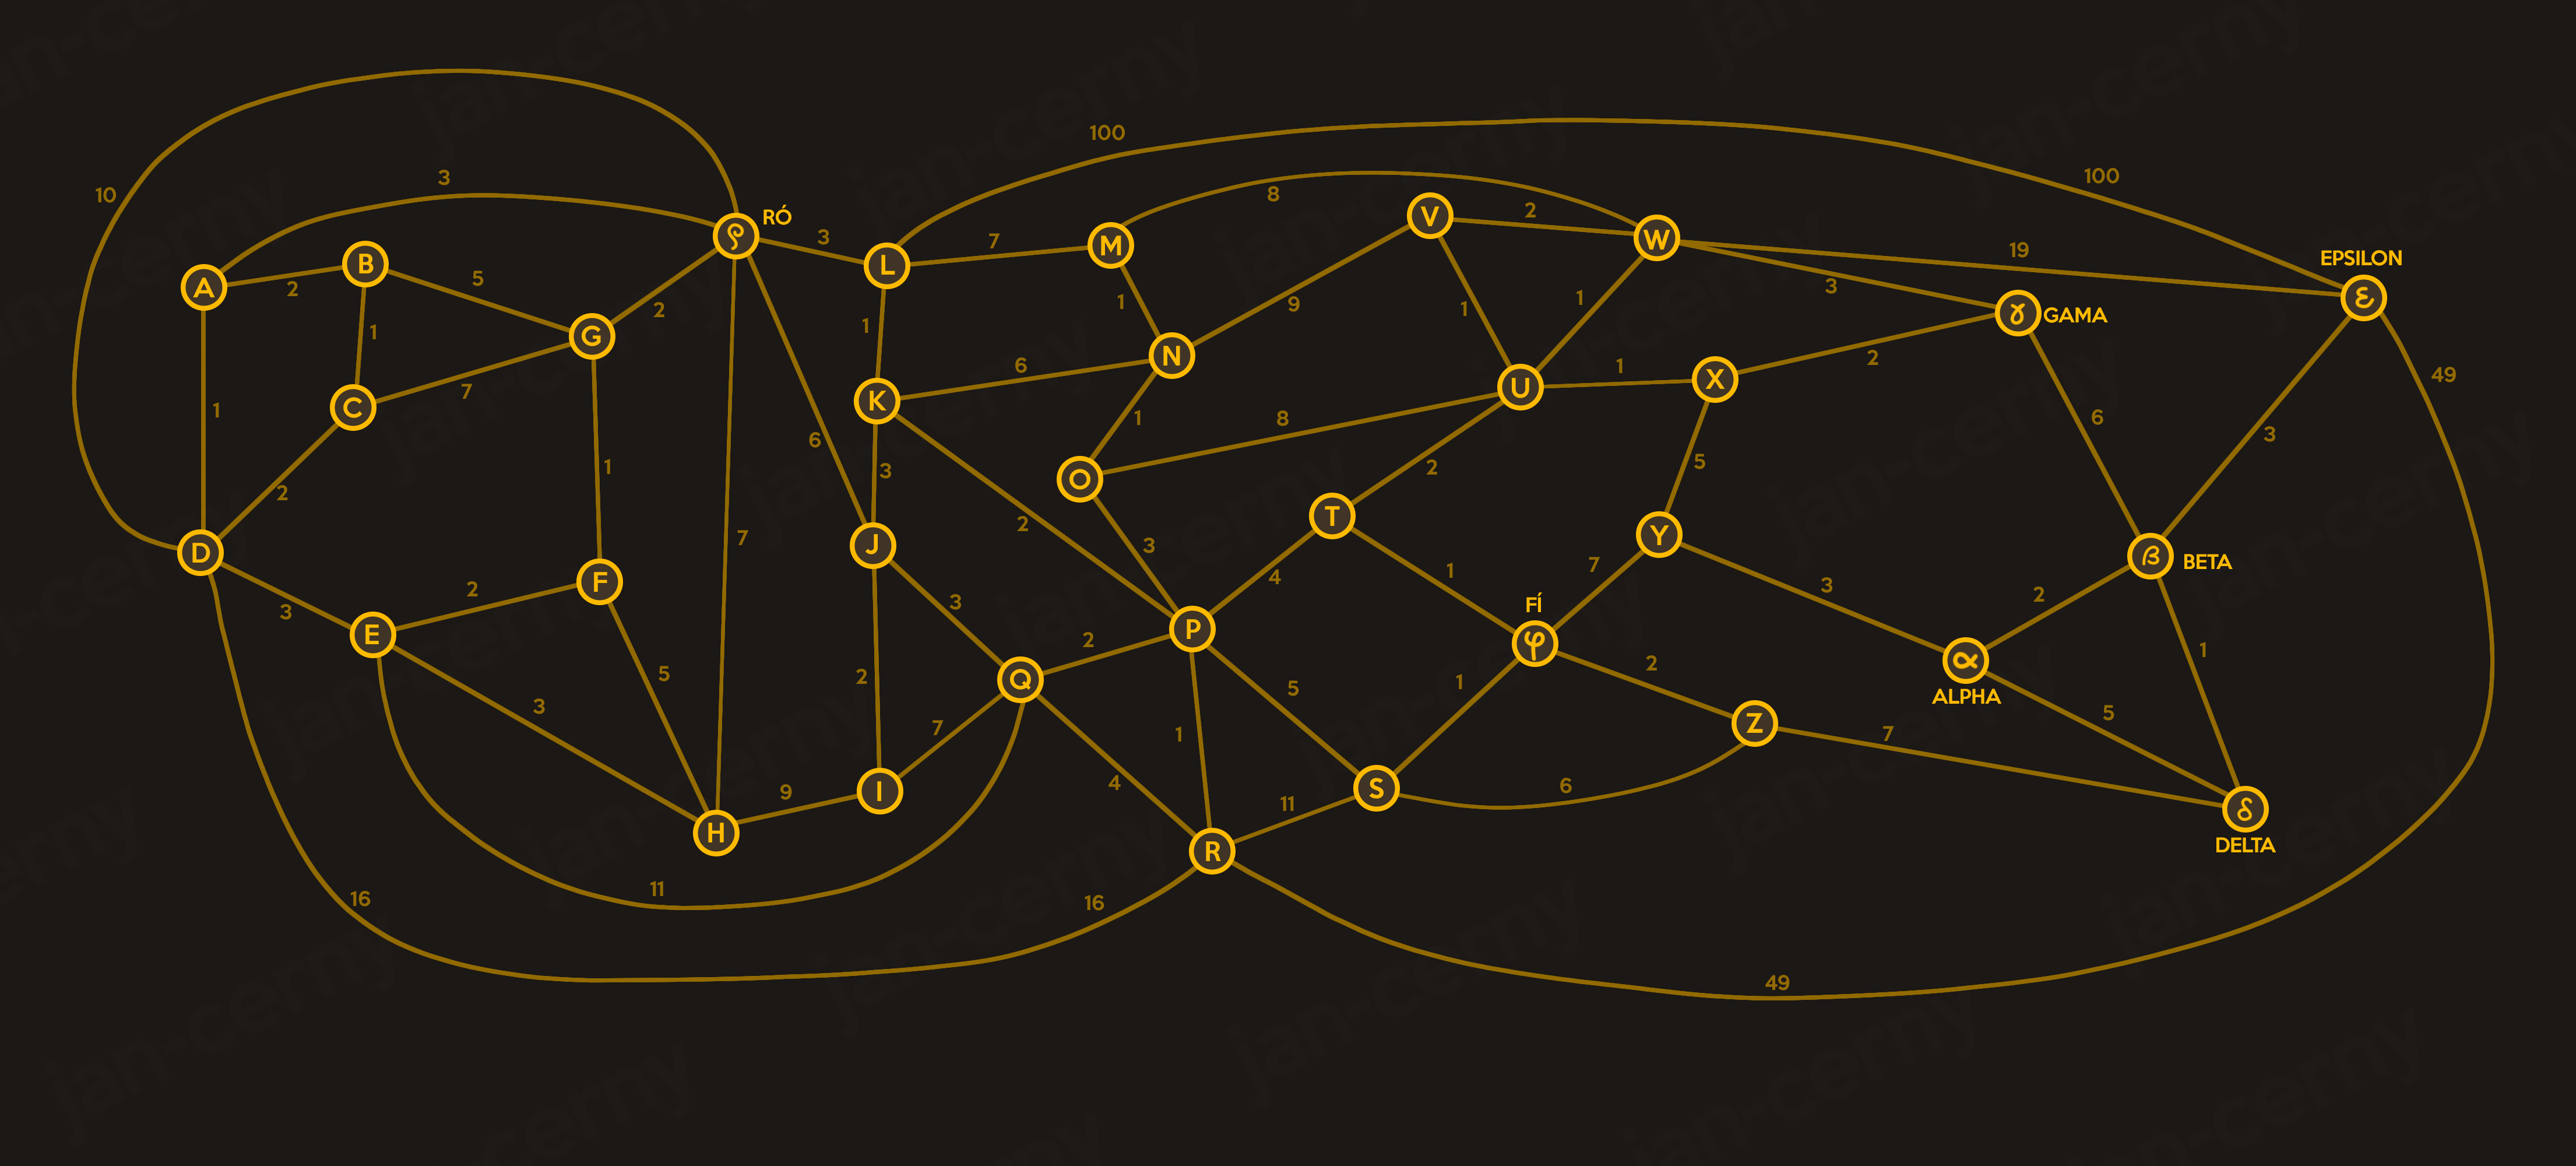 Pre-created network schema